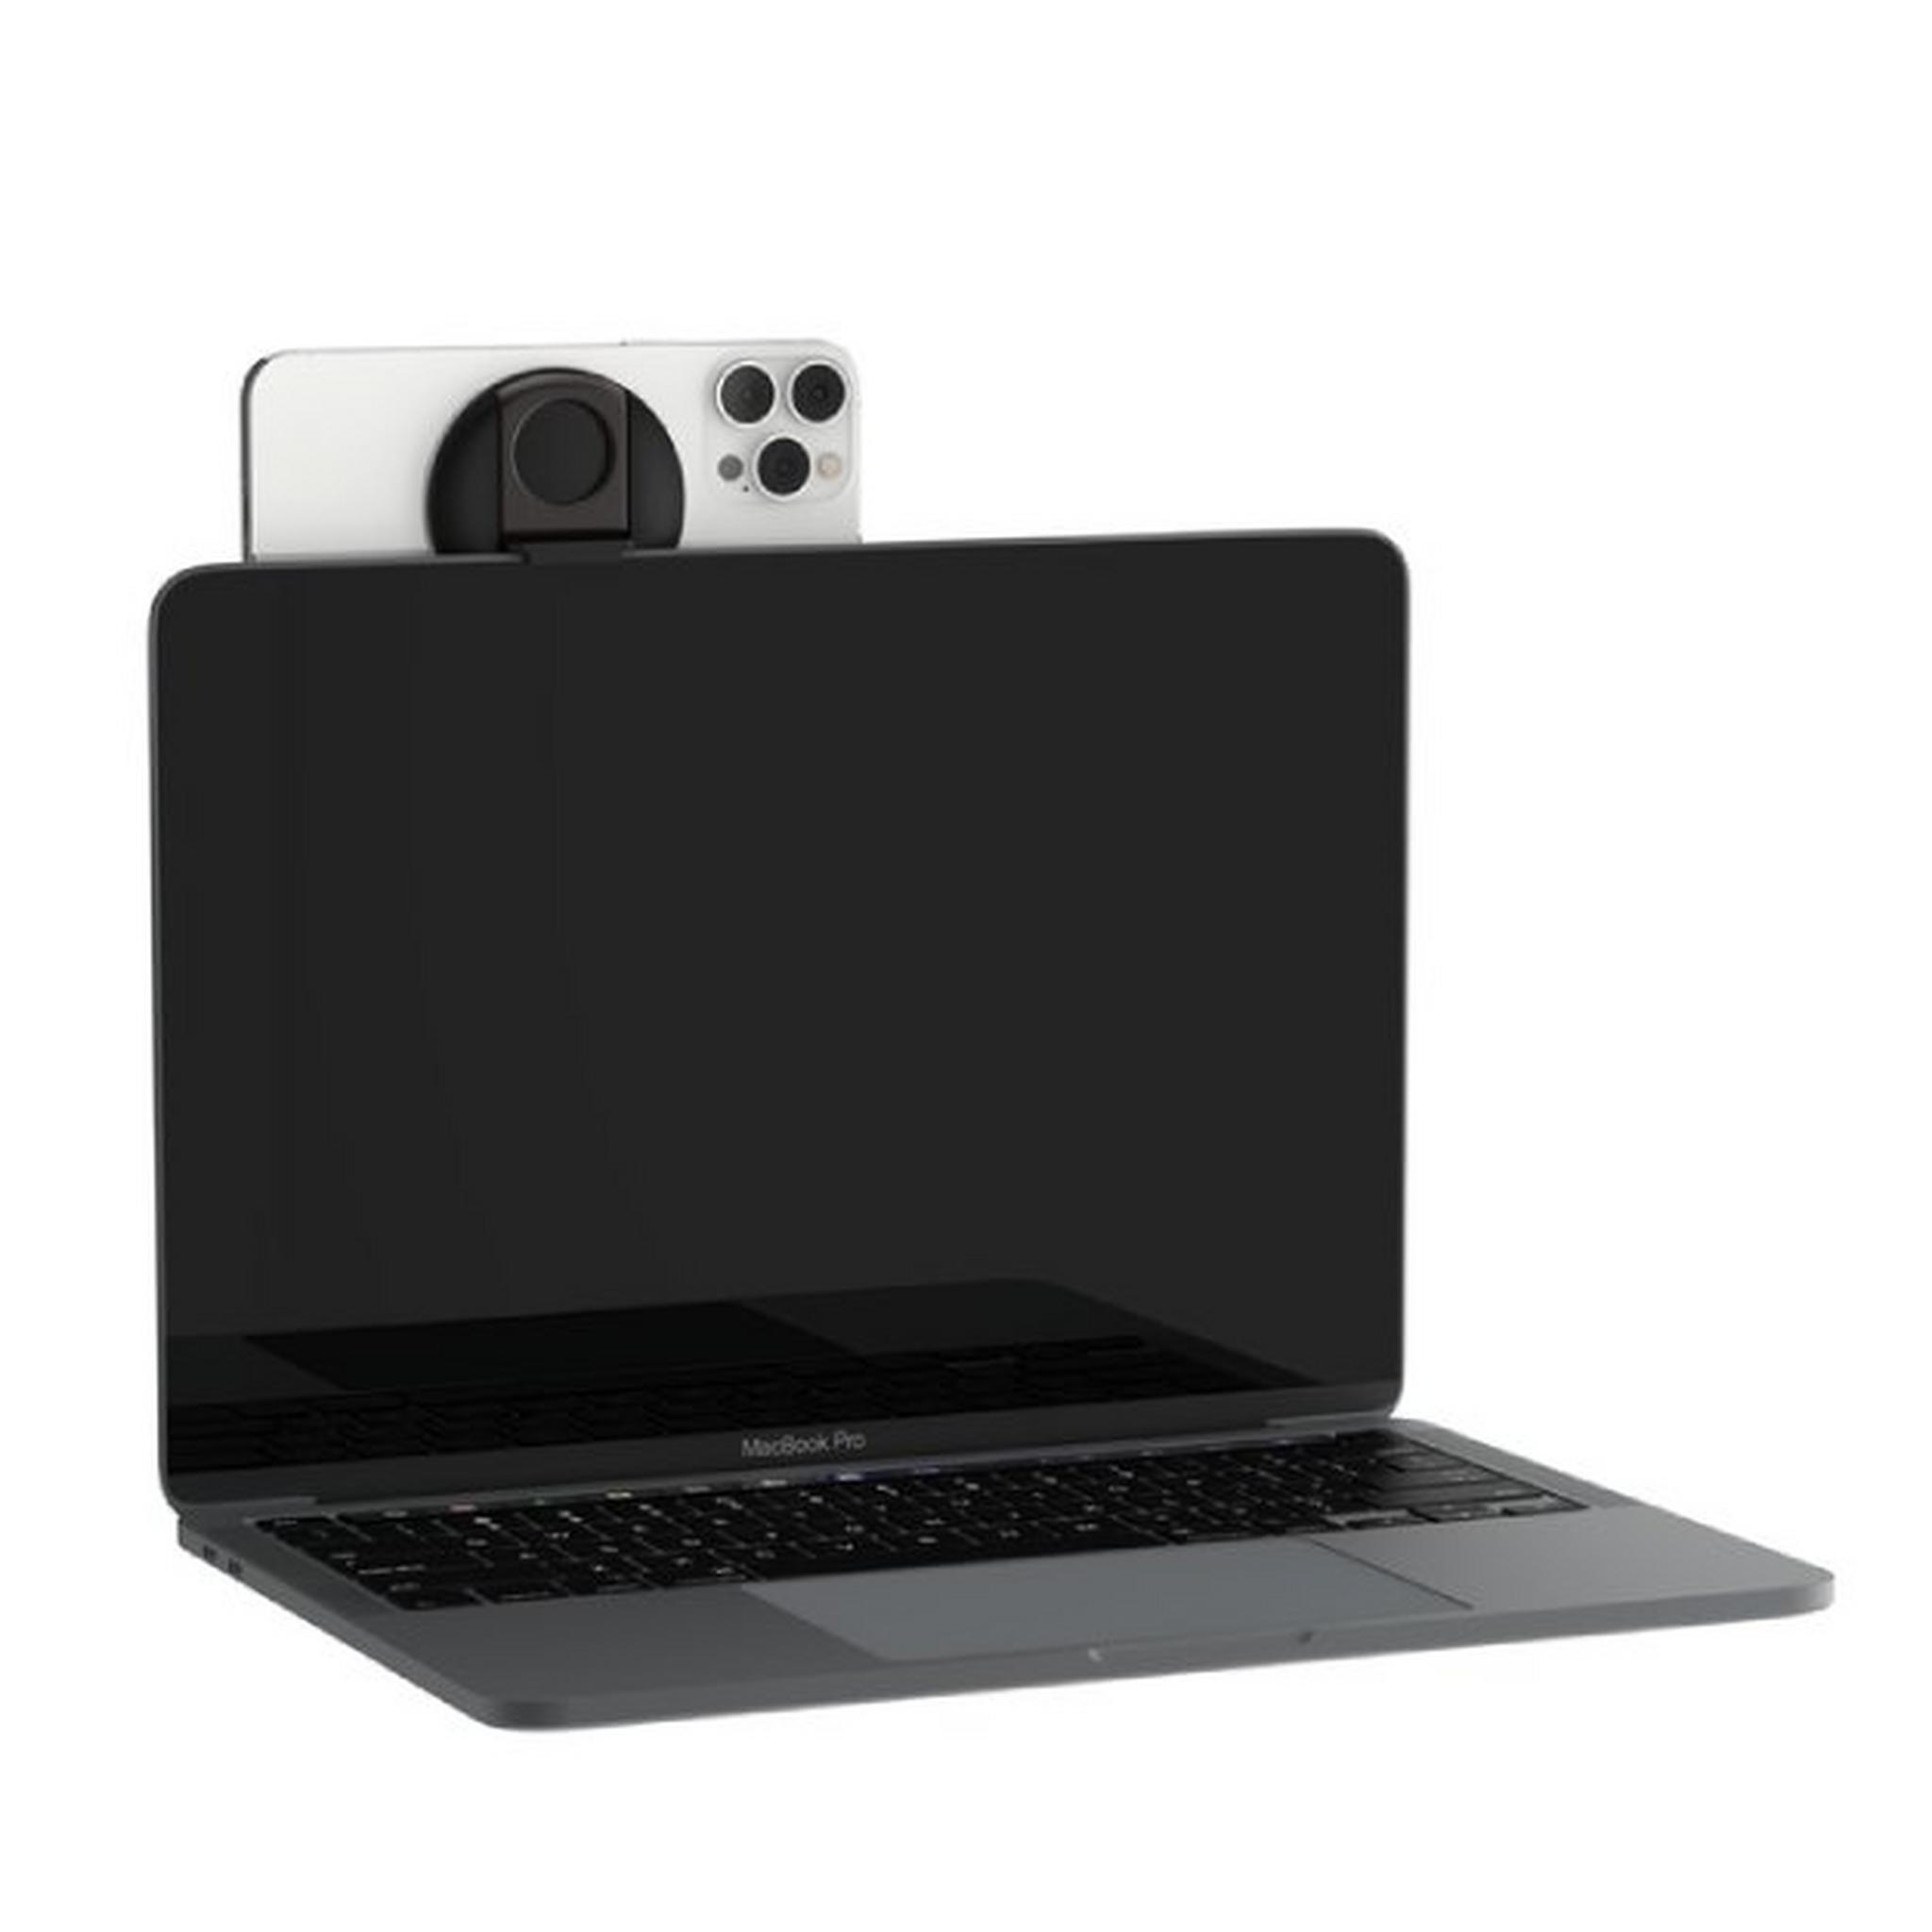 Belkin iPhone Mount with MagSafe for MacBook, MMA006BTBK – Black